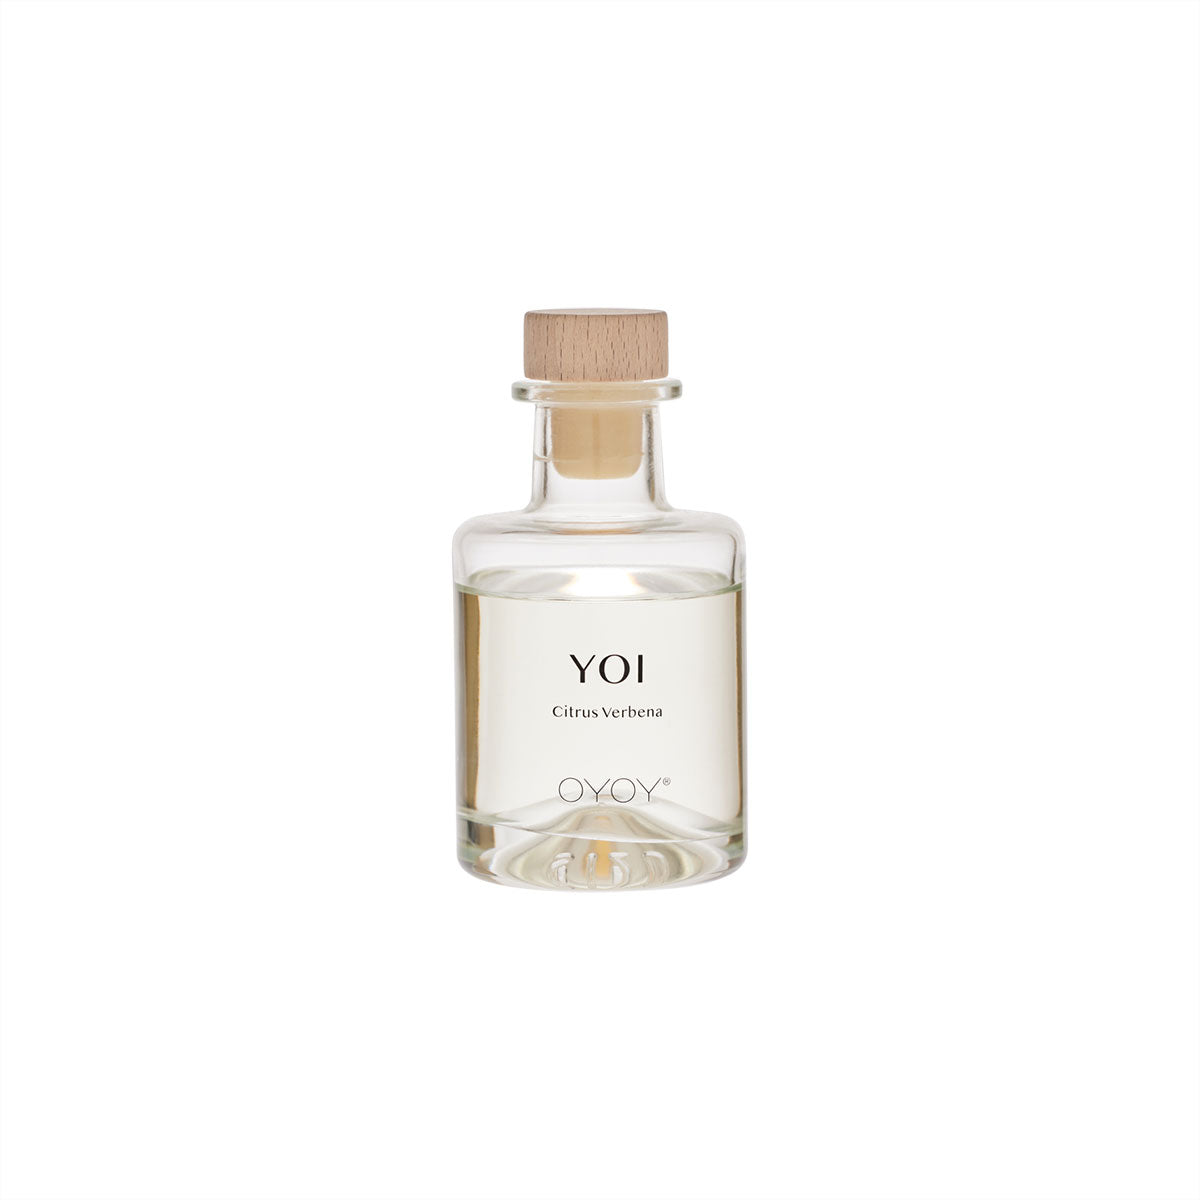 OYOY LIVING Fragrance Diffuser - Yoi Home Fragrance 902 Clear